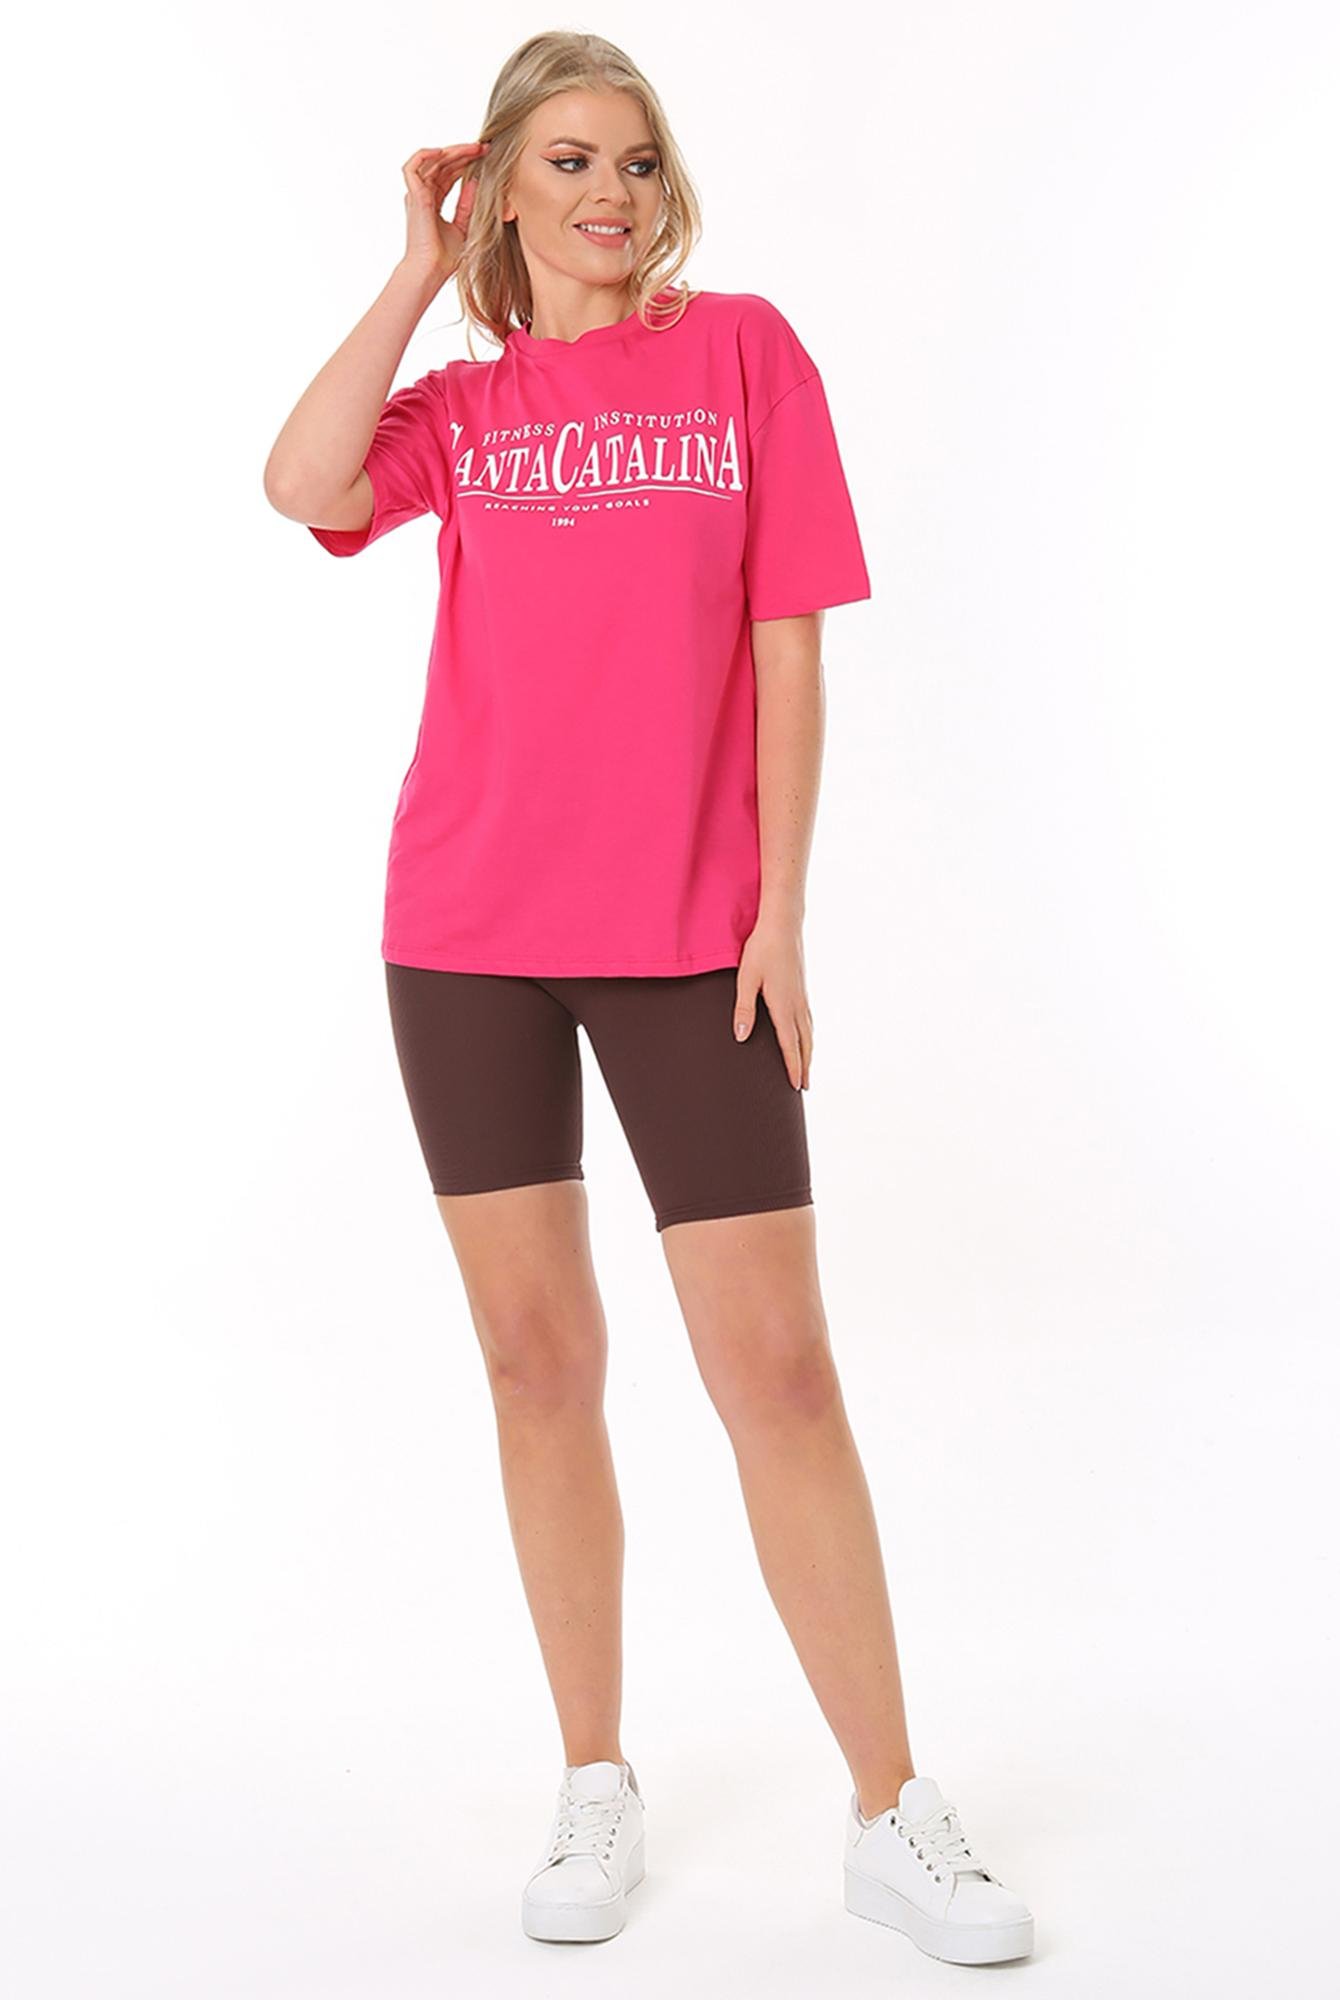  Ecrou Kadın Fuşya Santa Catalina Baskılı Regular Fit Tshirt